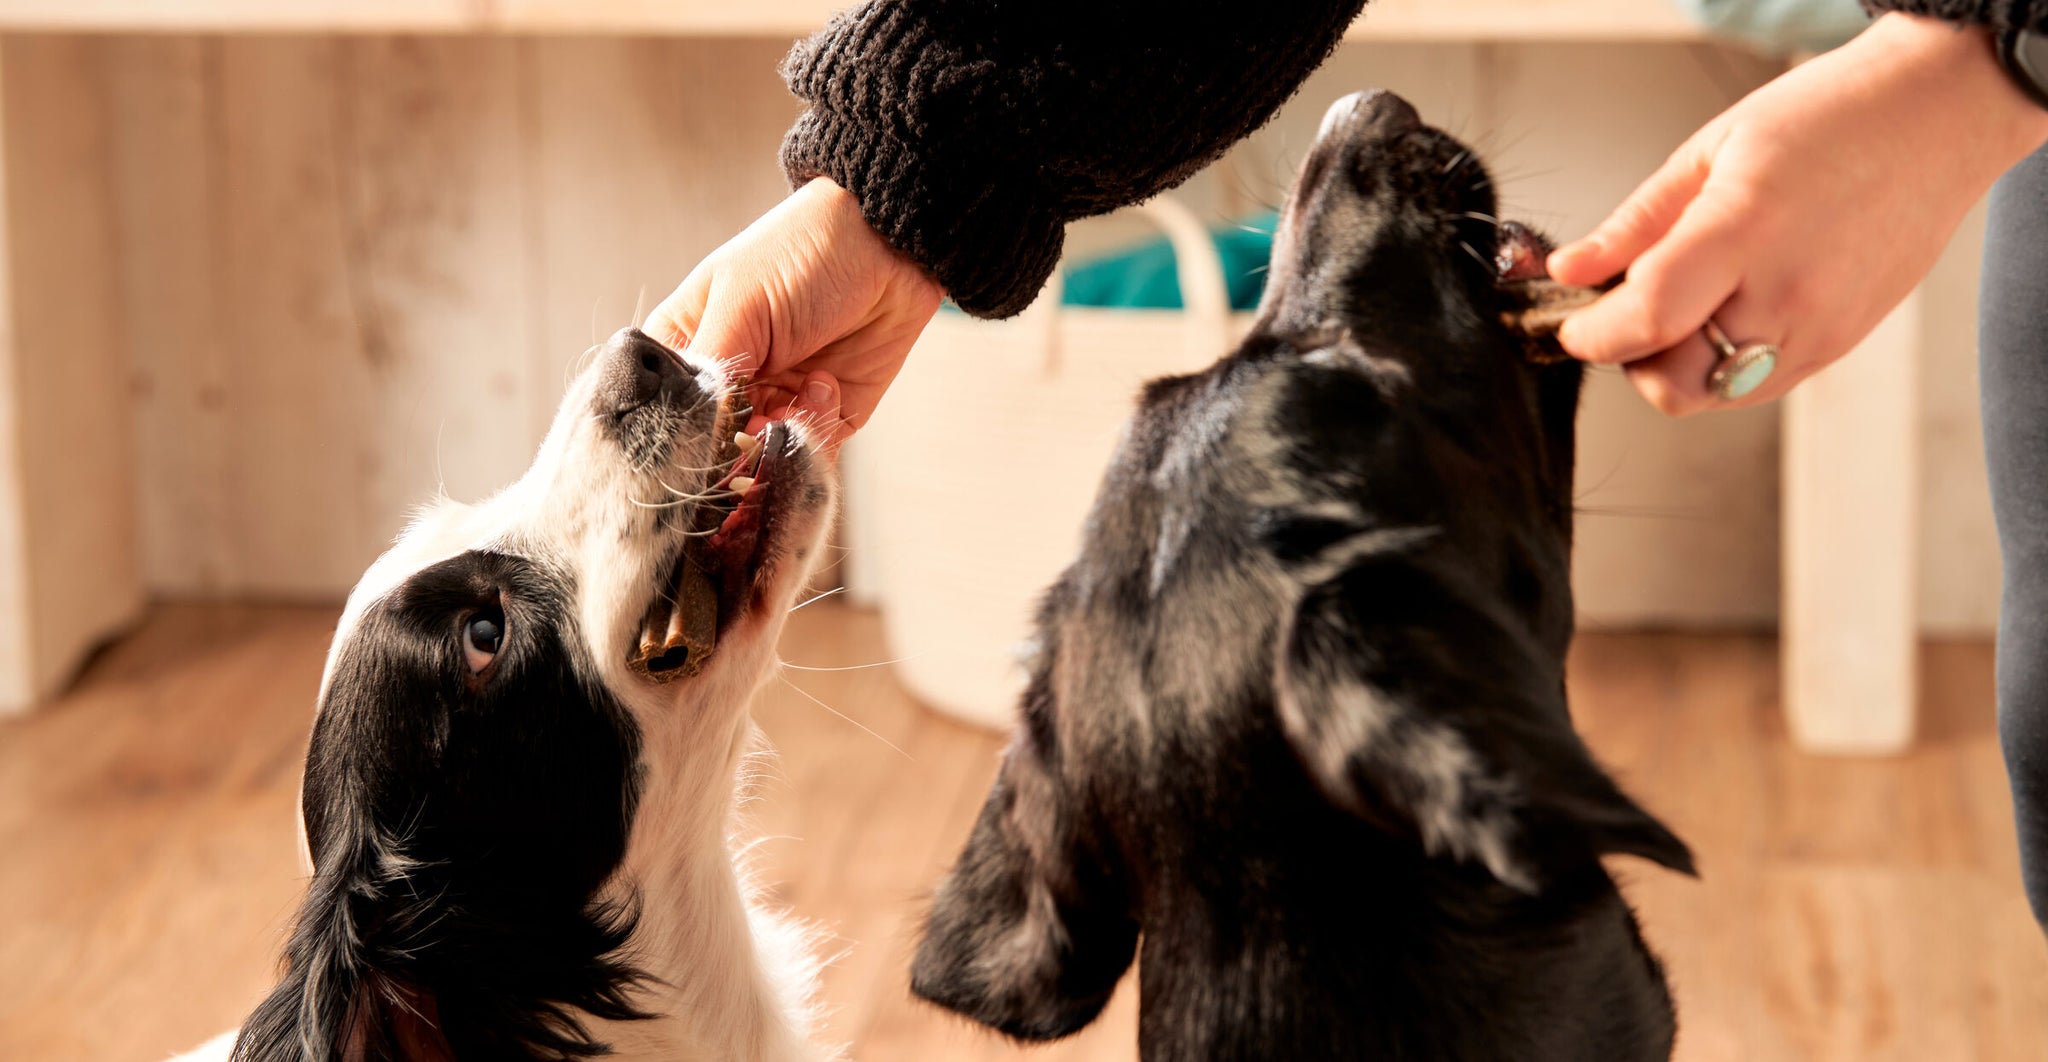 Dogs being fed dental sticks